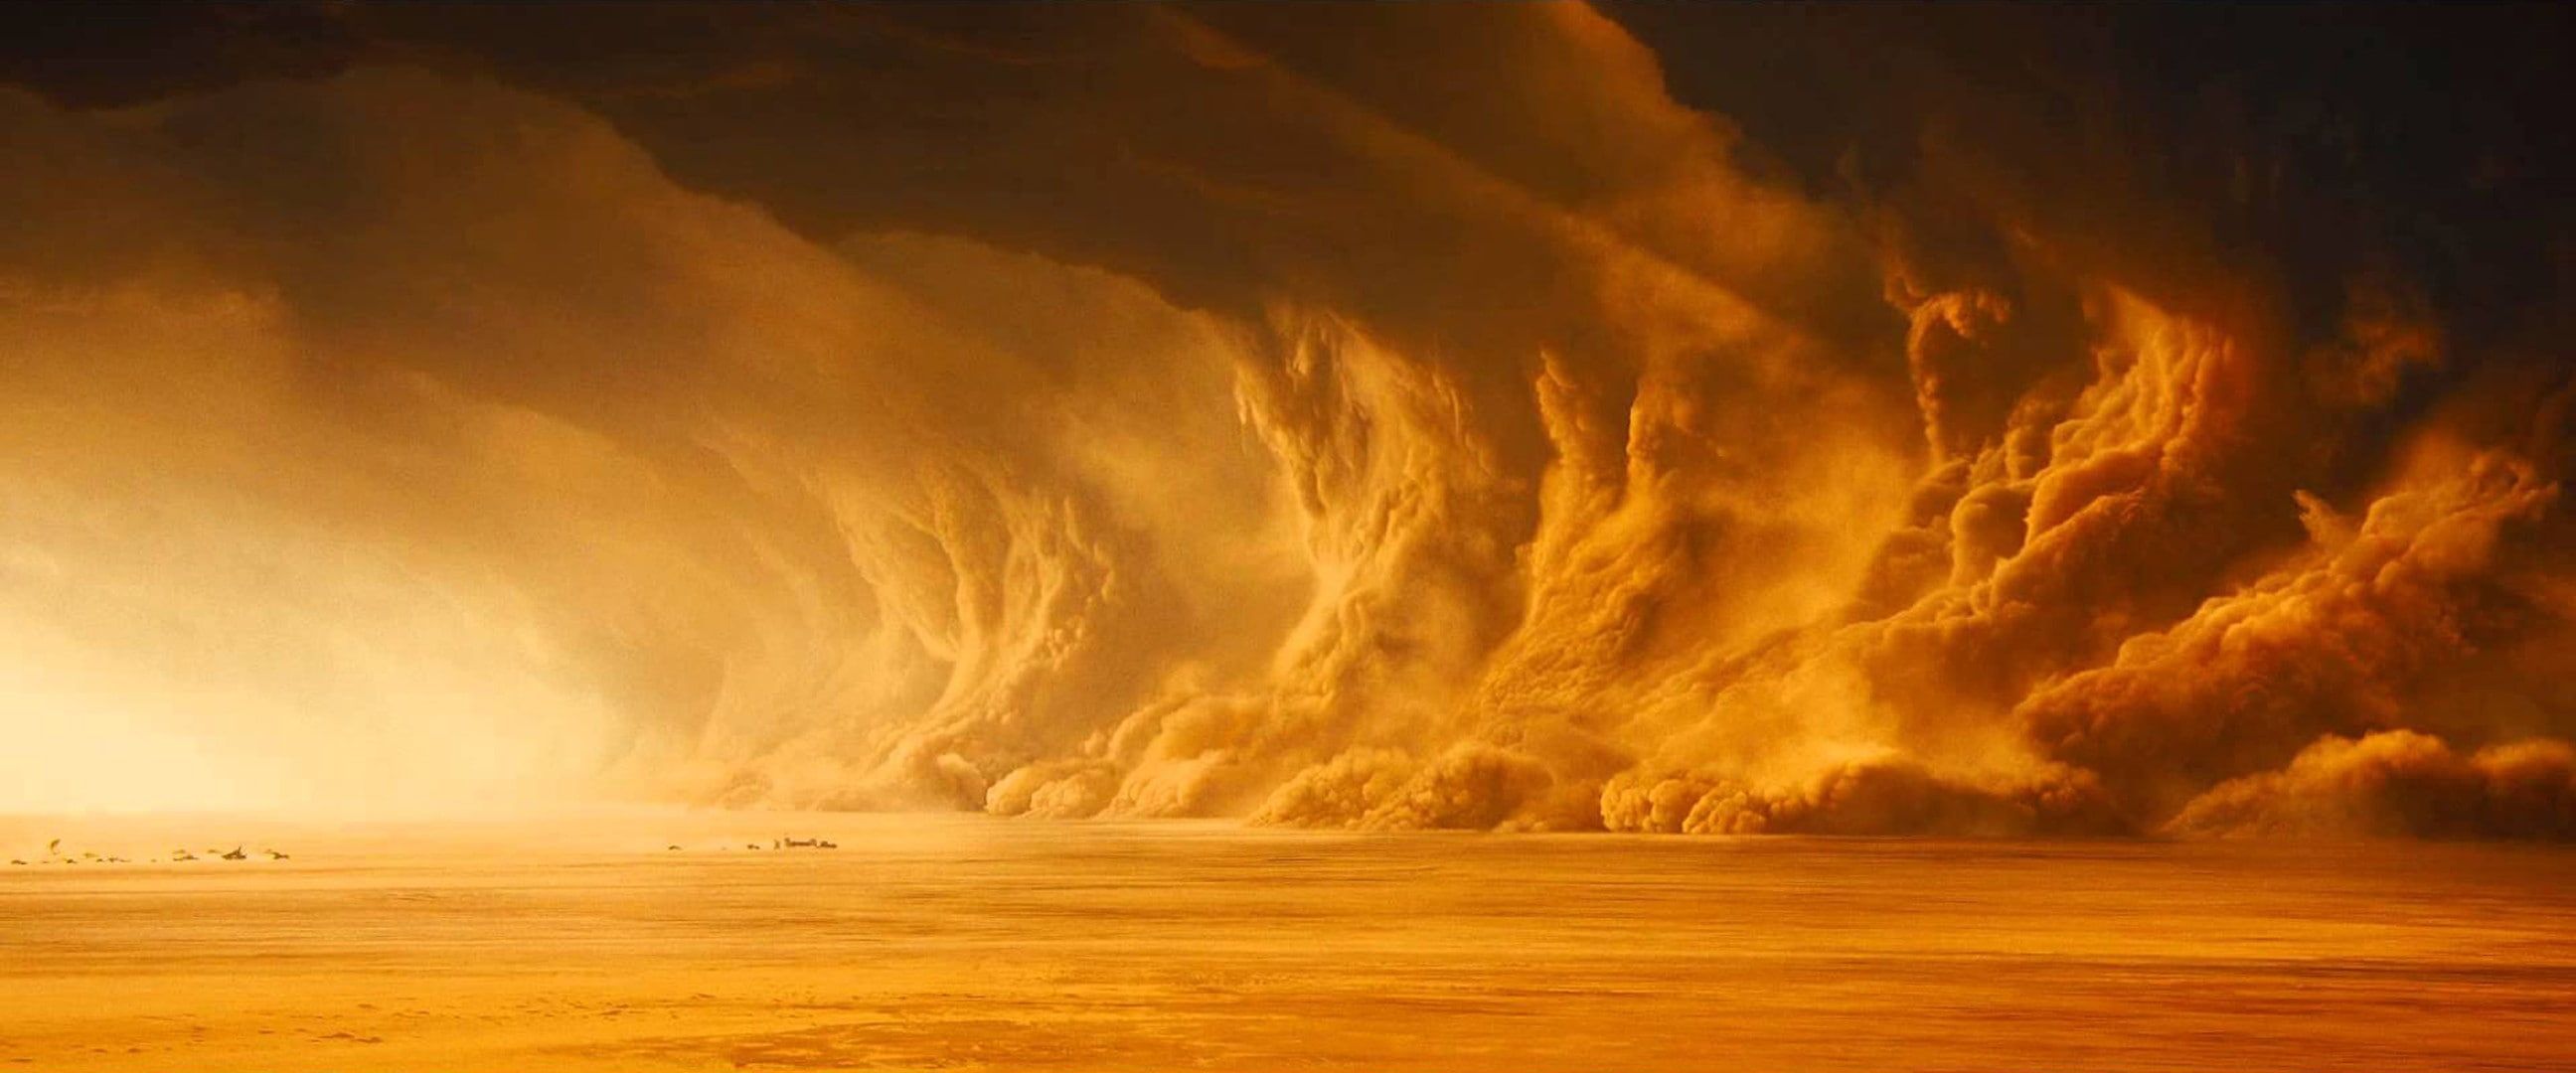 Sandstorms Mad Max Fury Road 2k